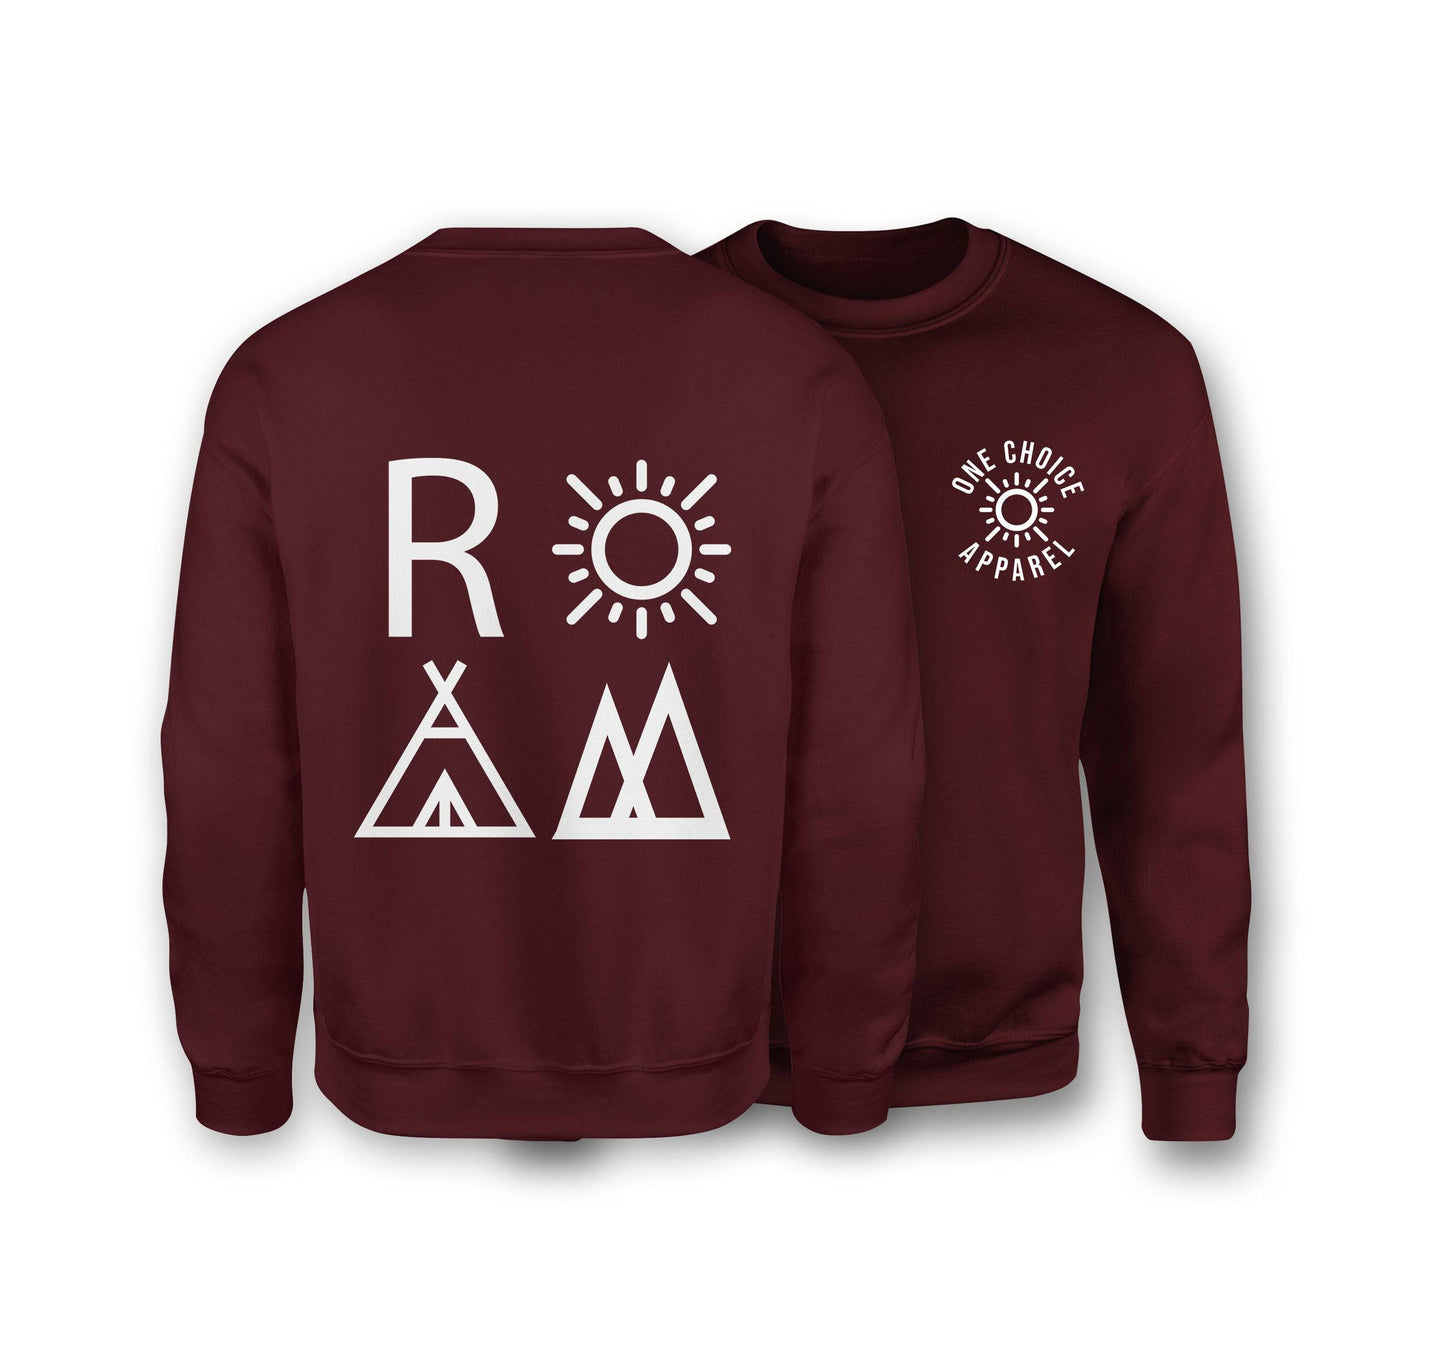 ROAM - Organic Cotton Sweatshirt - One Choice Apparel